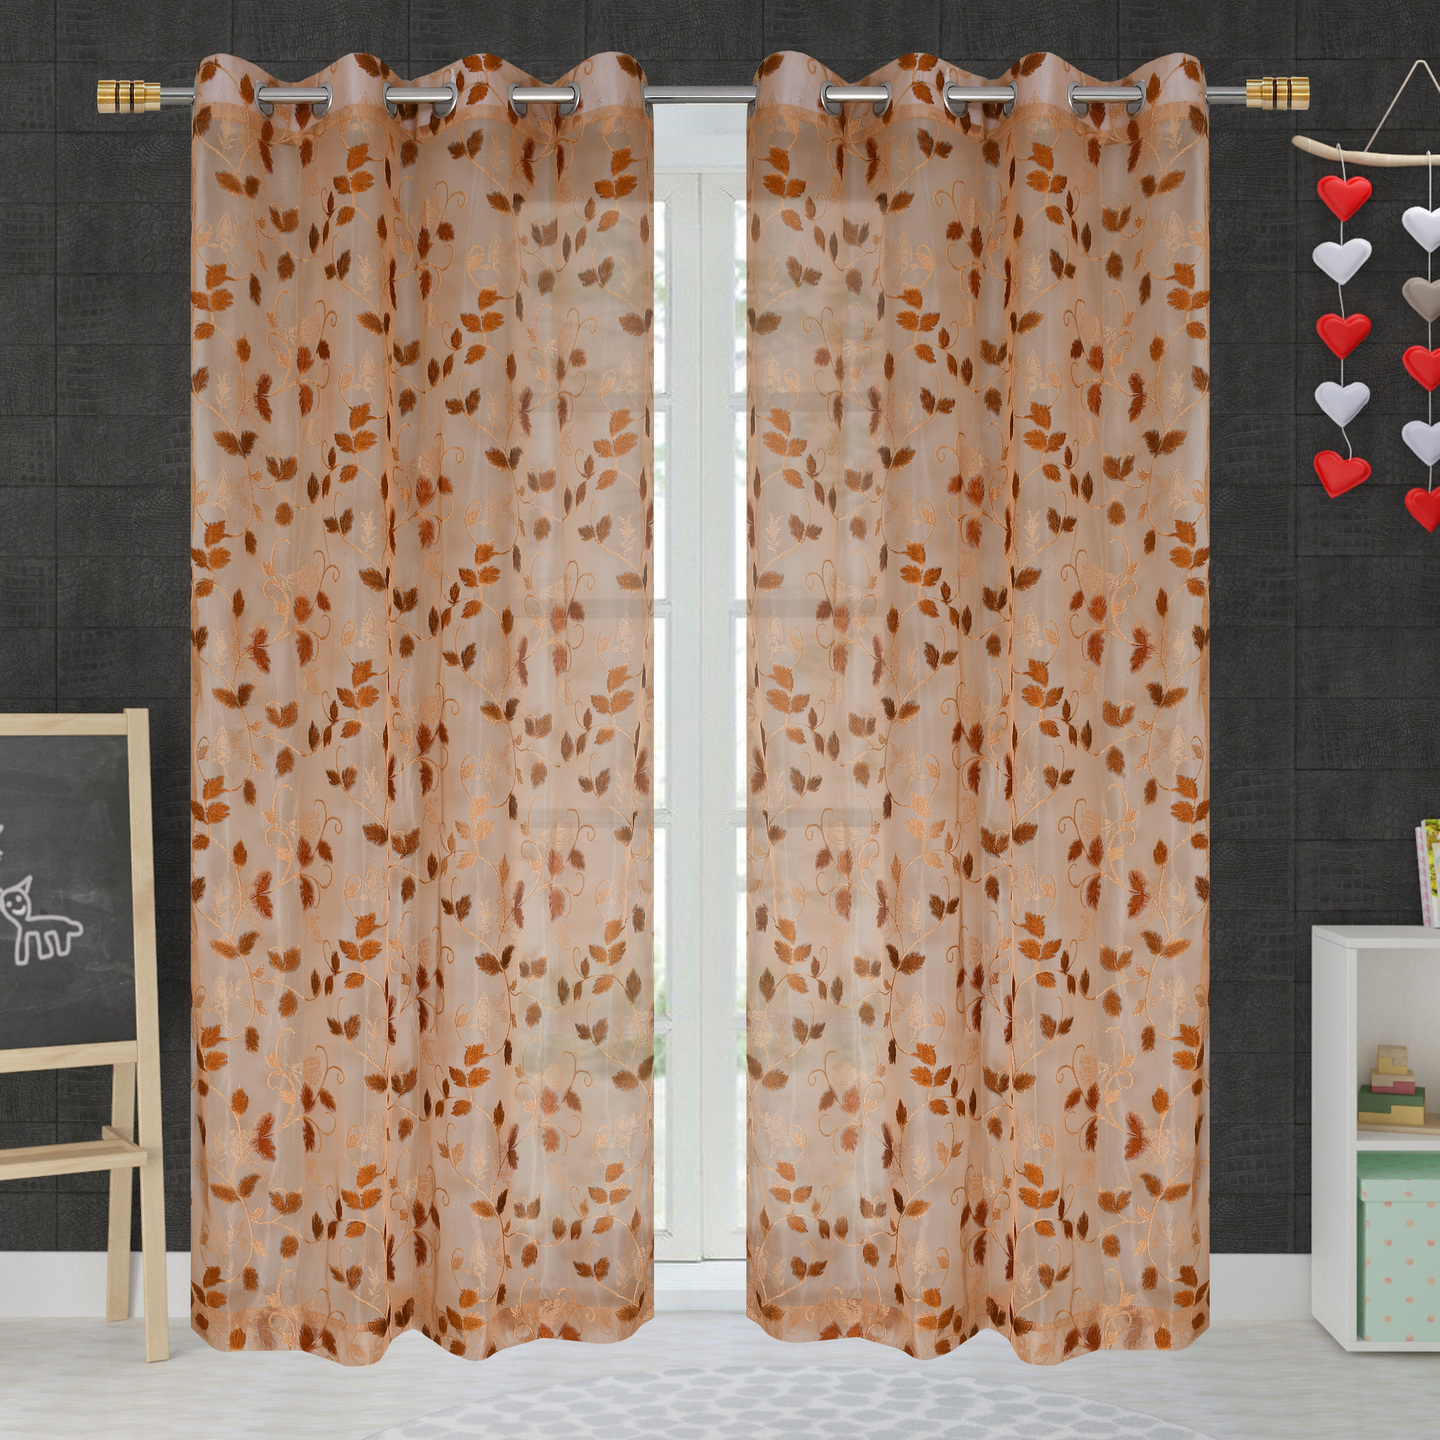 Handtex Home Net door curtain 4 feet x 7 feet Brown set of 2 pc